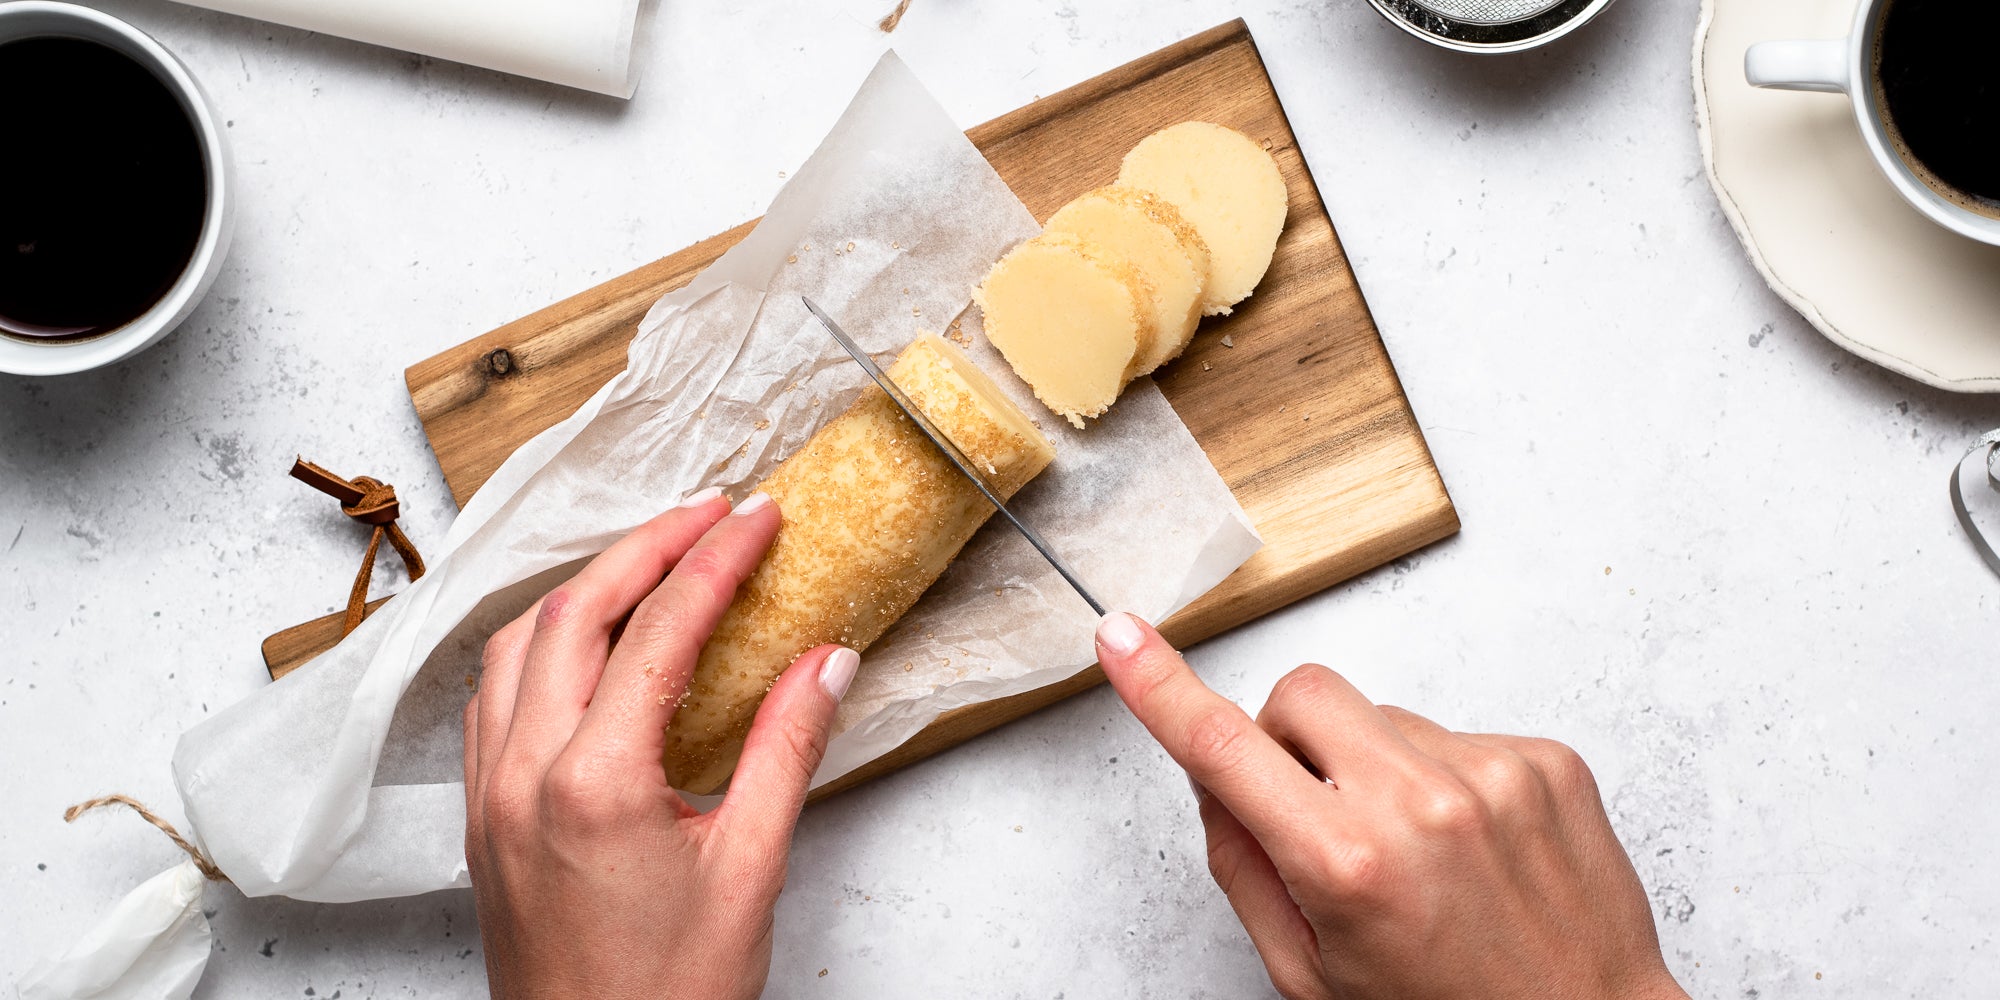 Top down view of the hand slicing through vegan shortbread dough